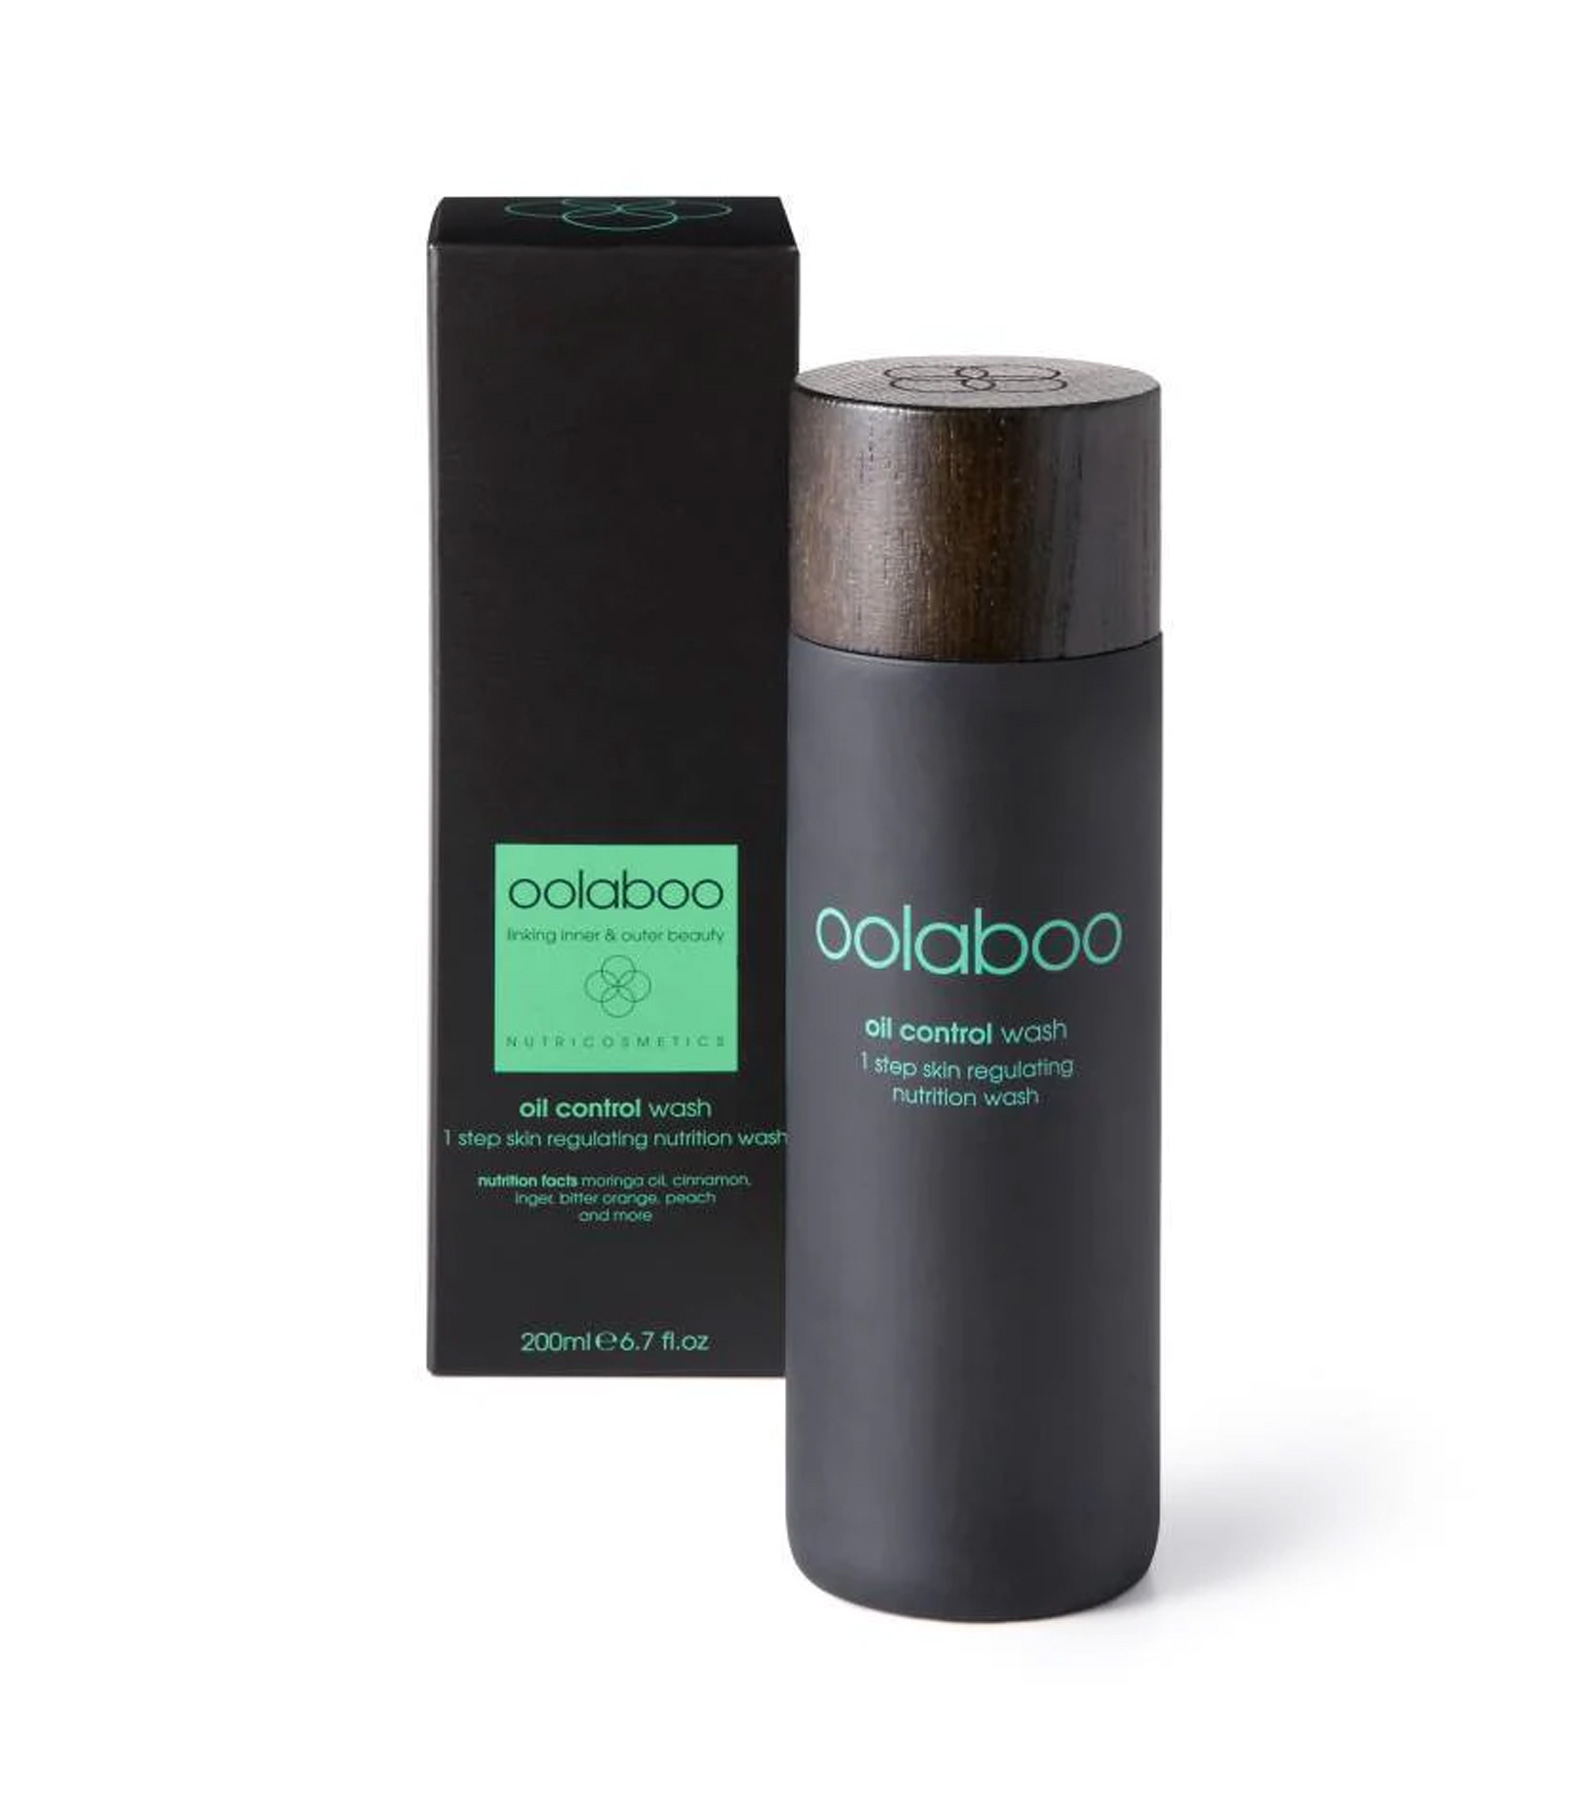 Oolaboo-Oil-Control-Wash